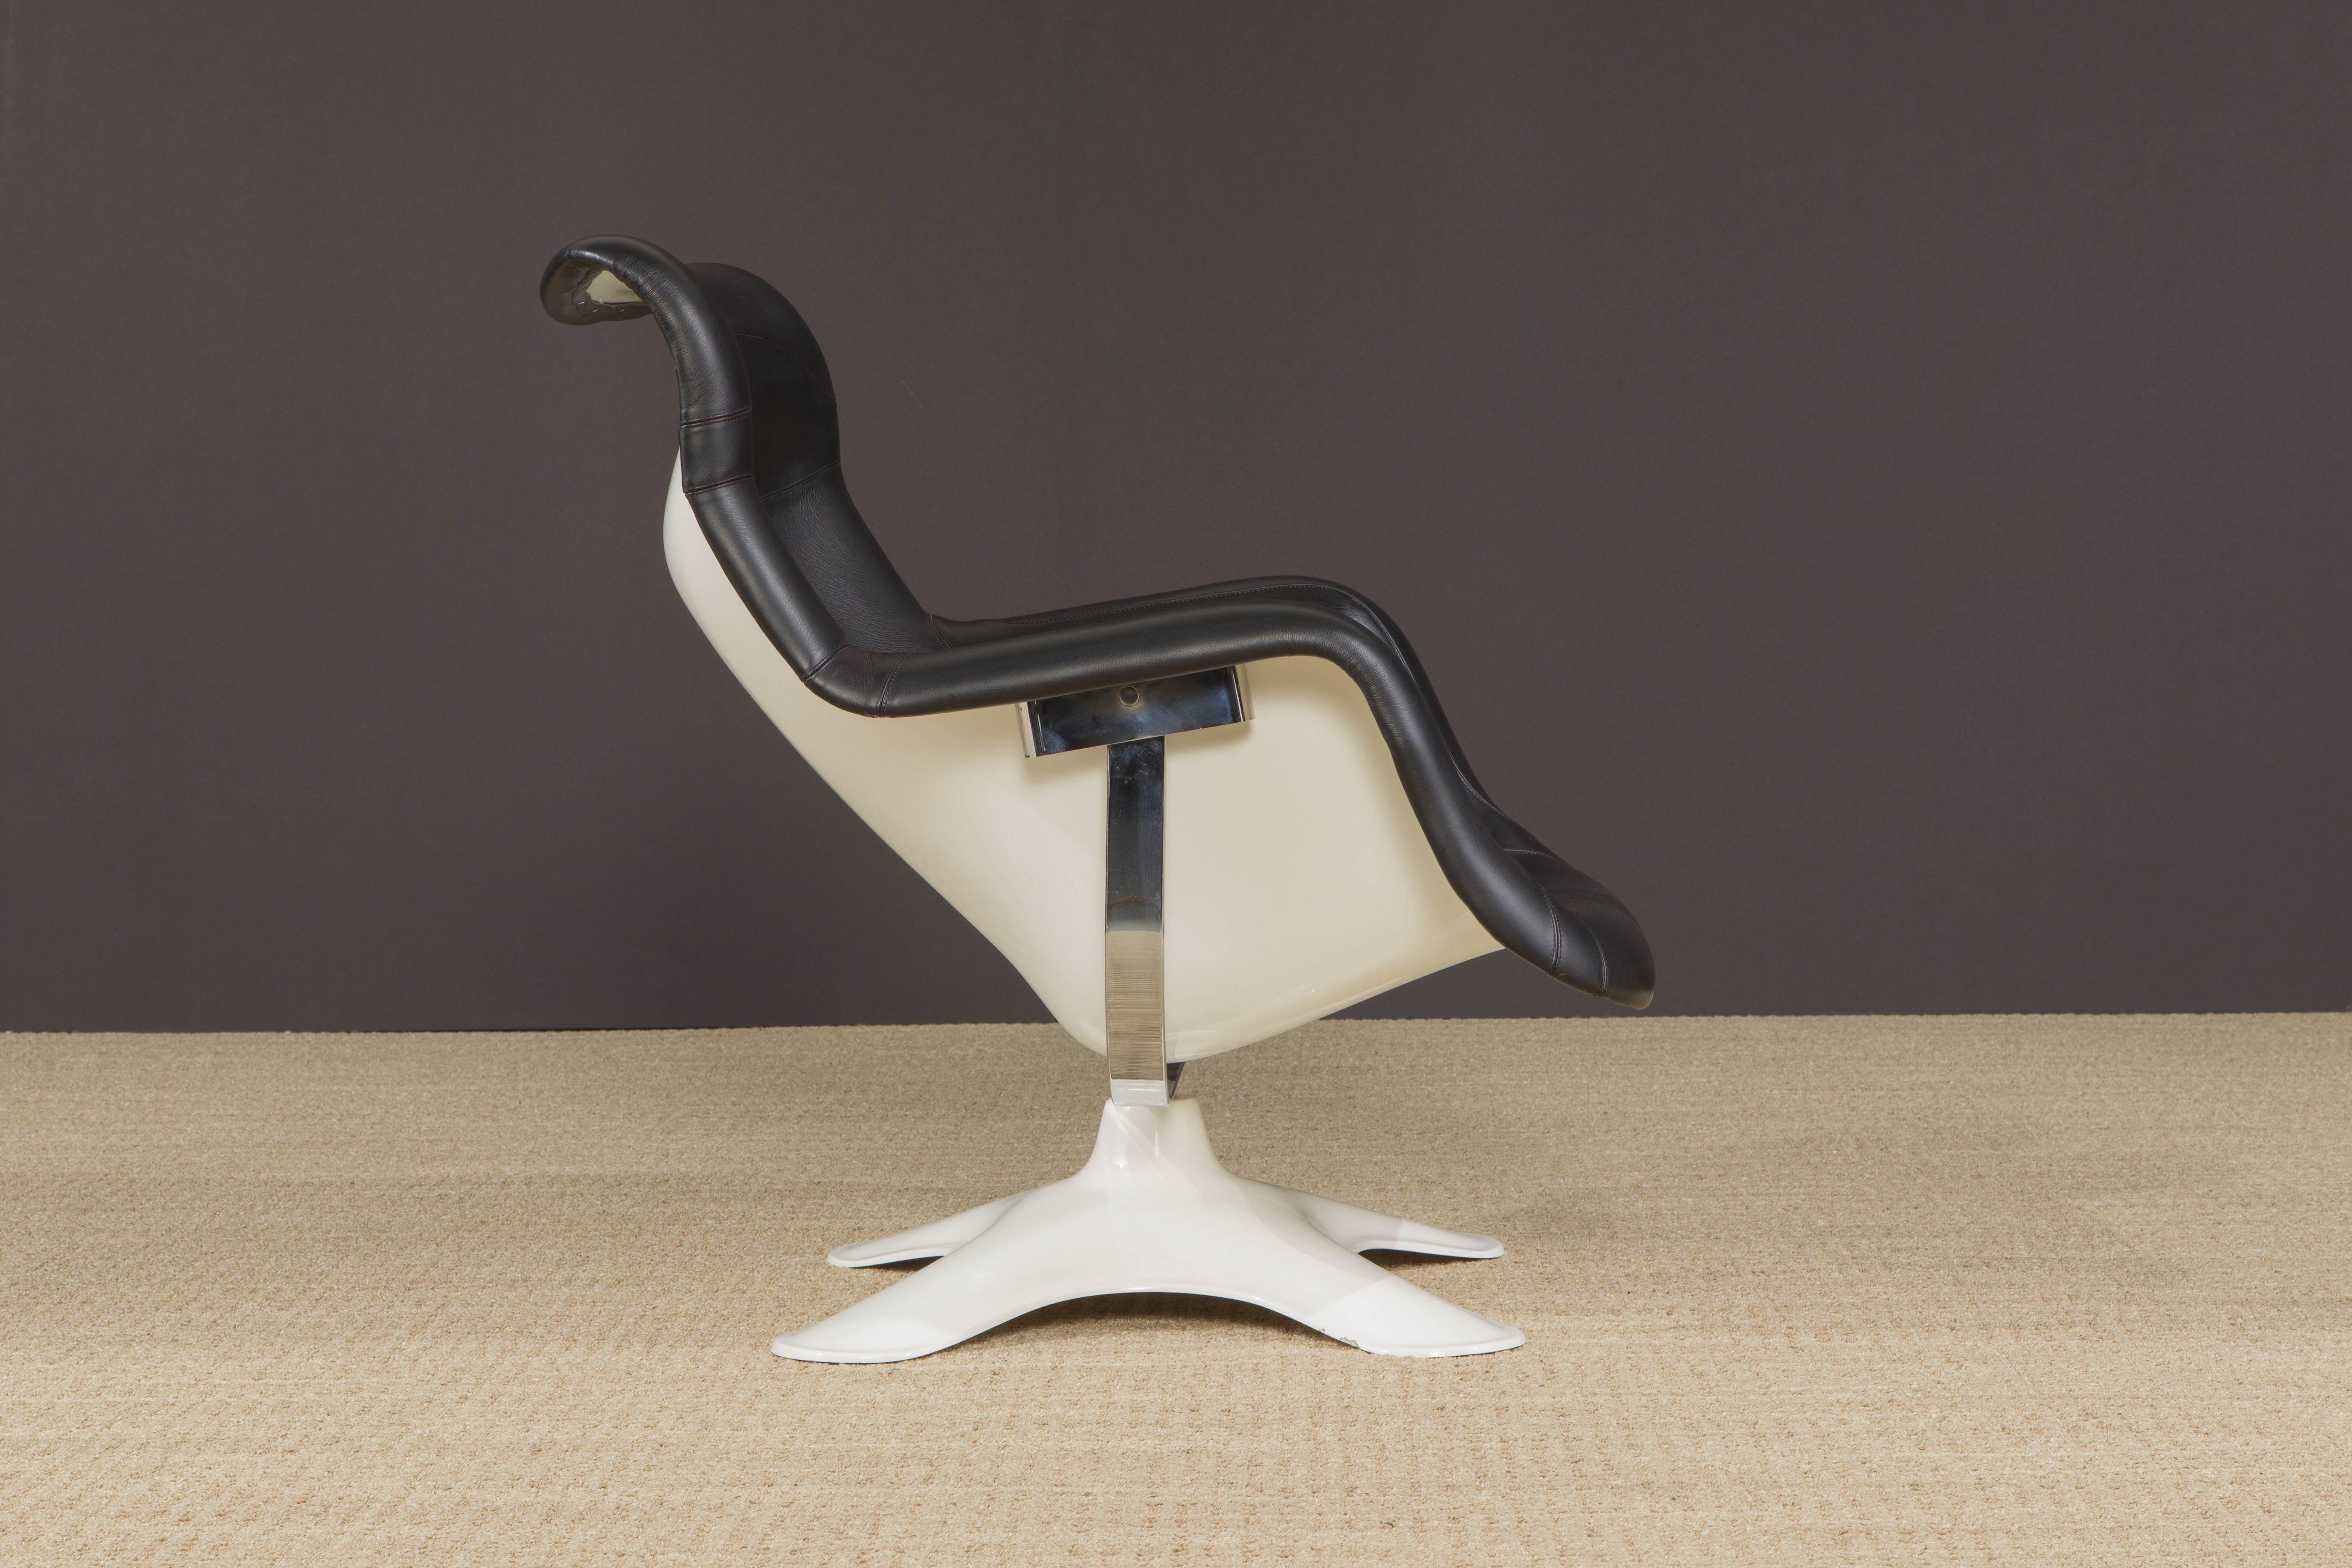 Yrjö Kukkapuro for Artek 'Karuselli' Chair and Ottoman, Finland In Good Condition In Los Angeles, CA